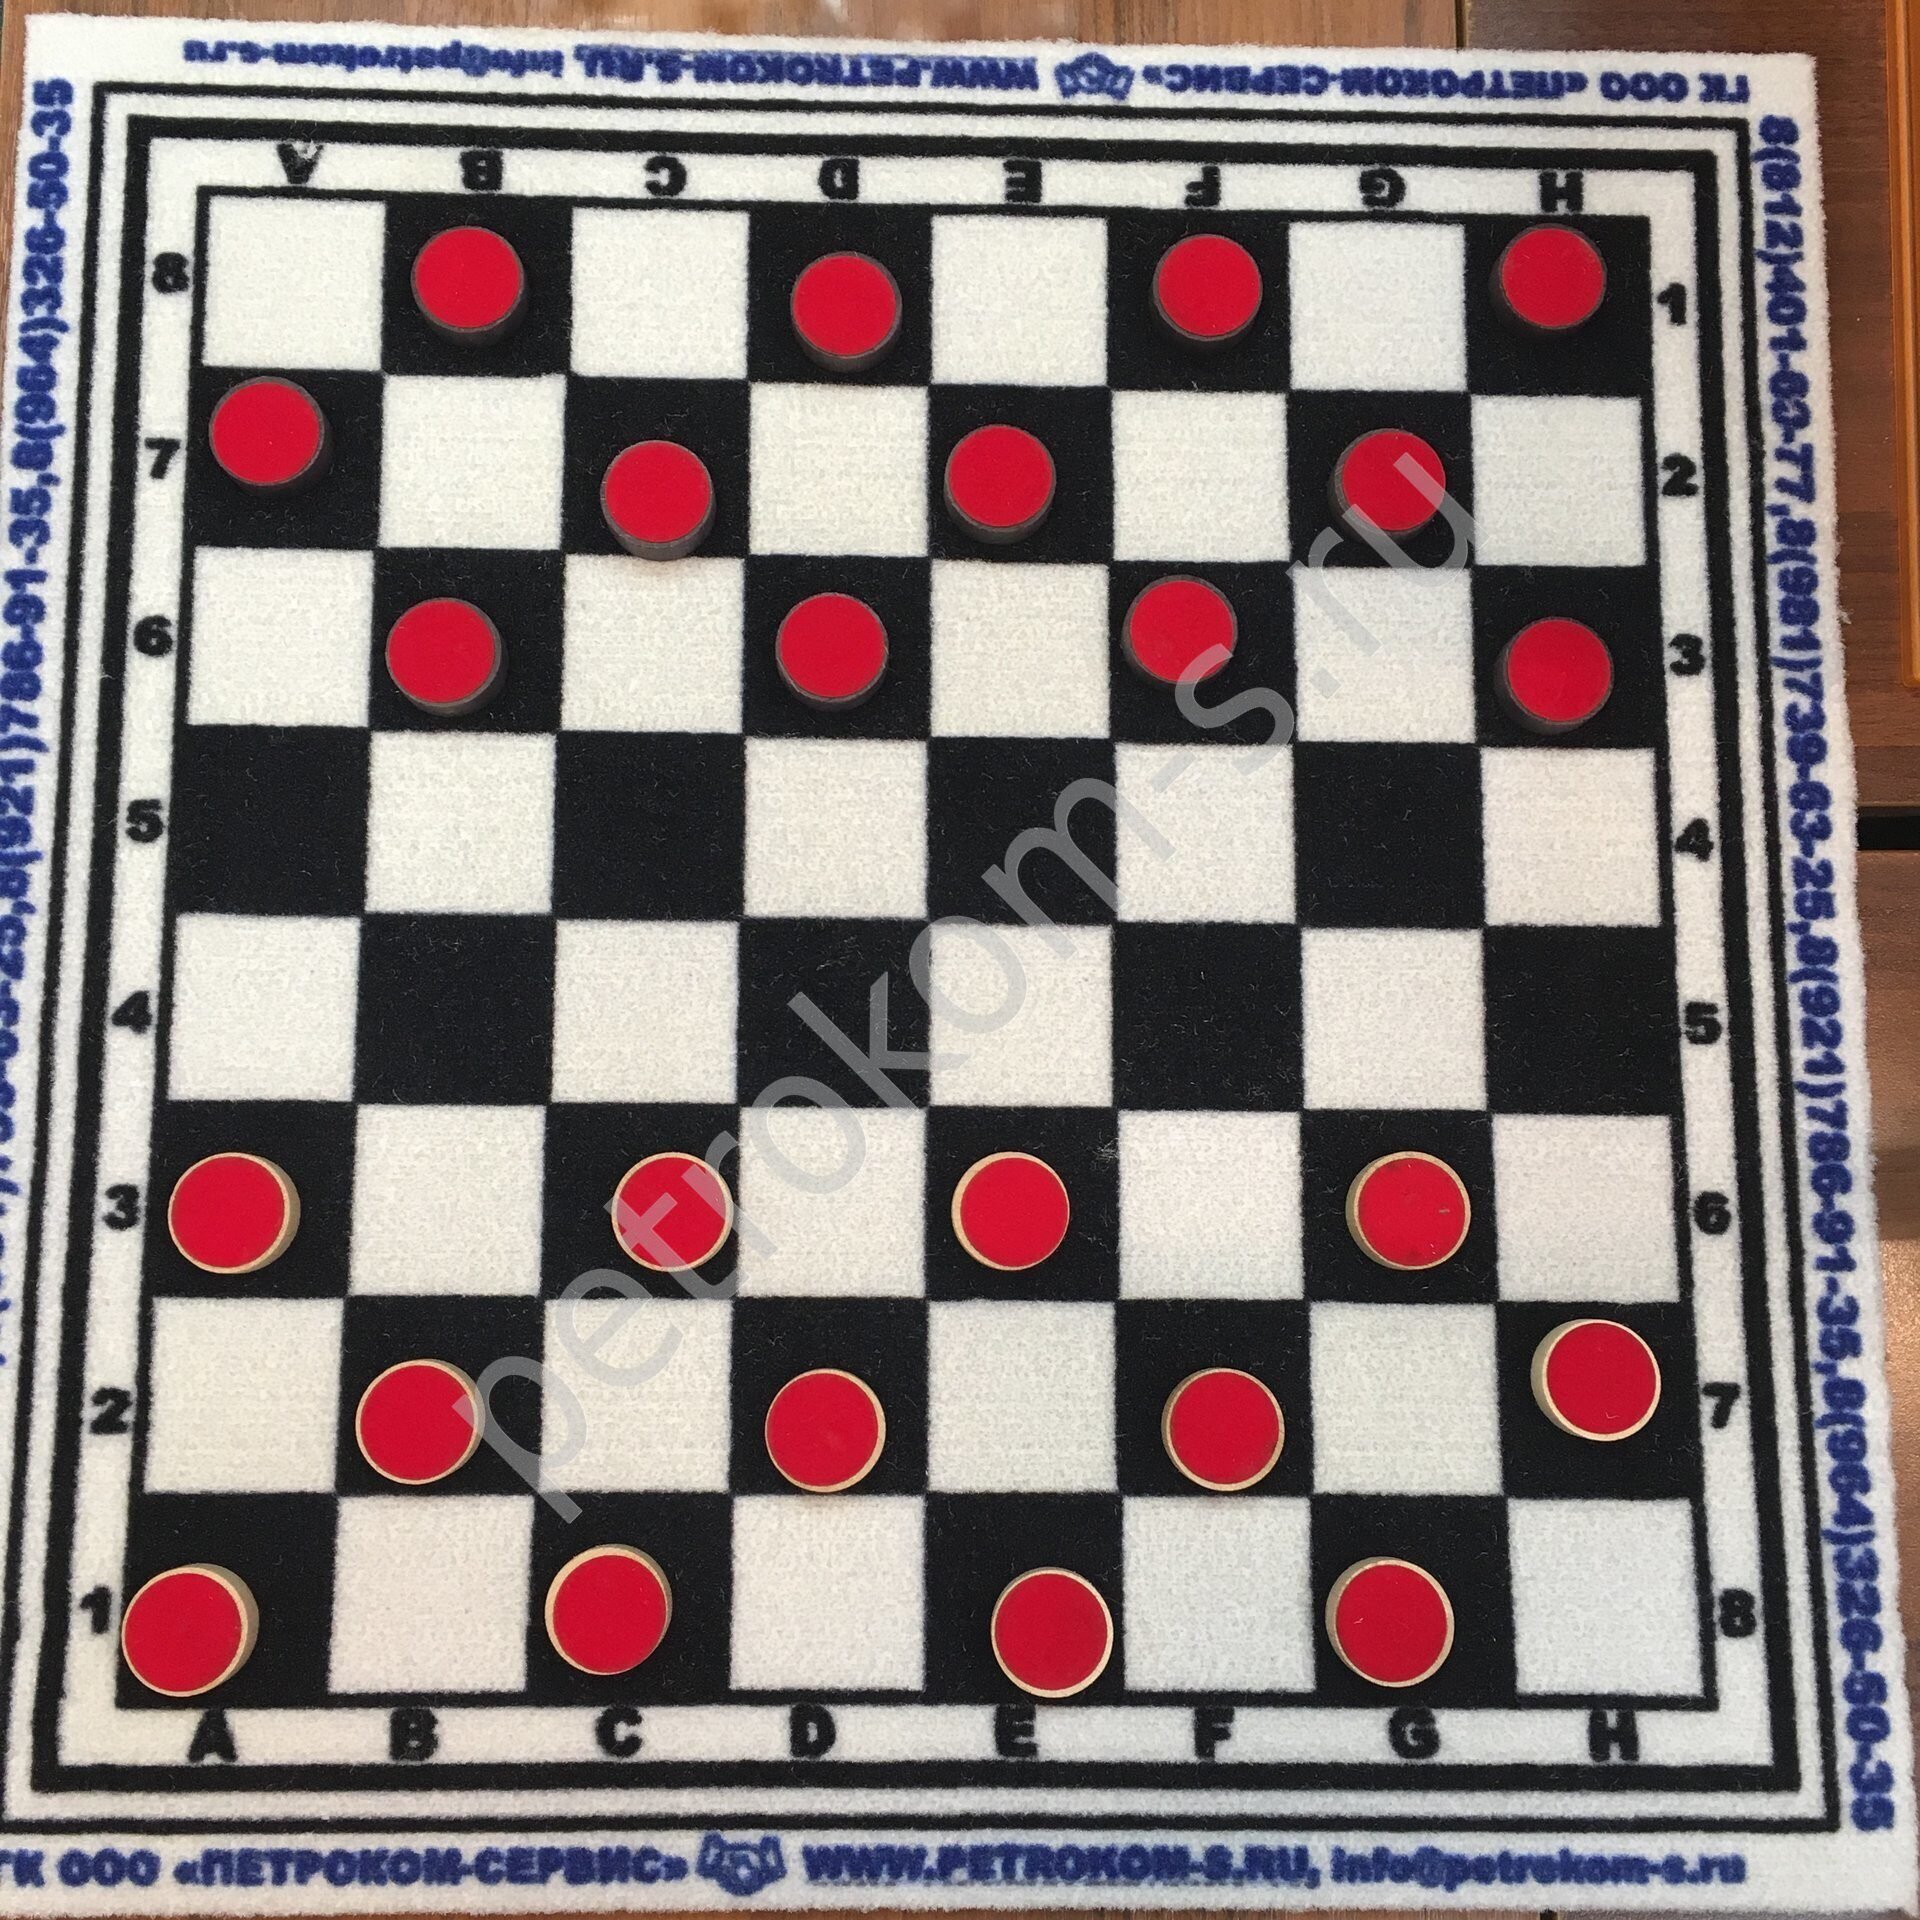 На шахматной доске 64 клетки. Шахматный ковер. Ковер шахматная доска. Шахматный коврик для шахмат. Ковер в шахматном стиле.